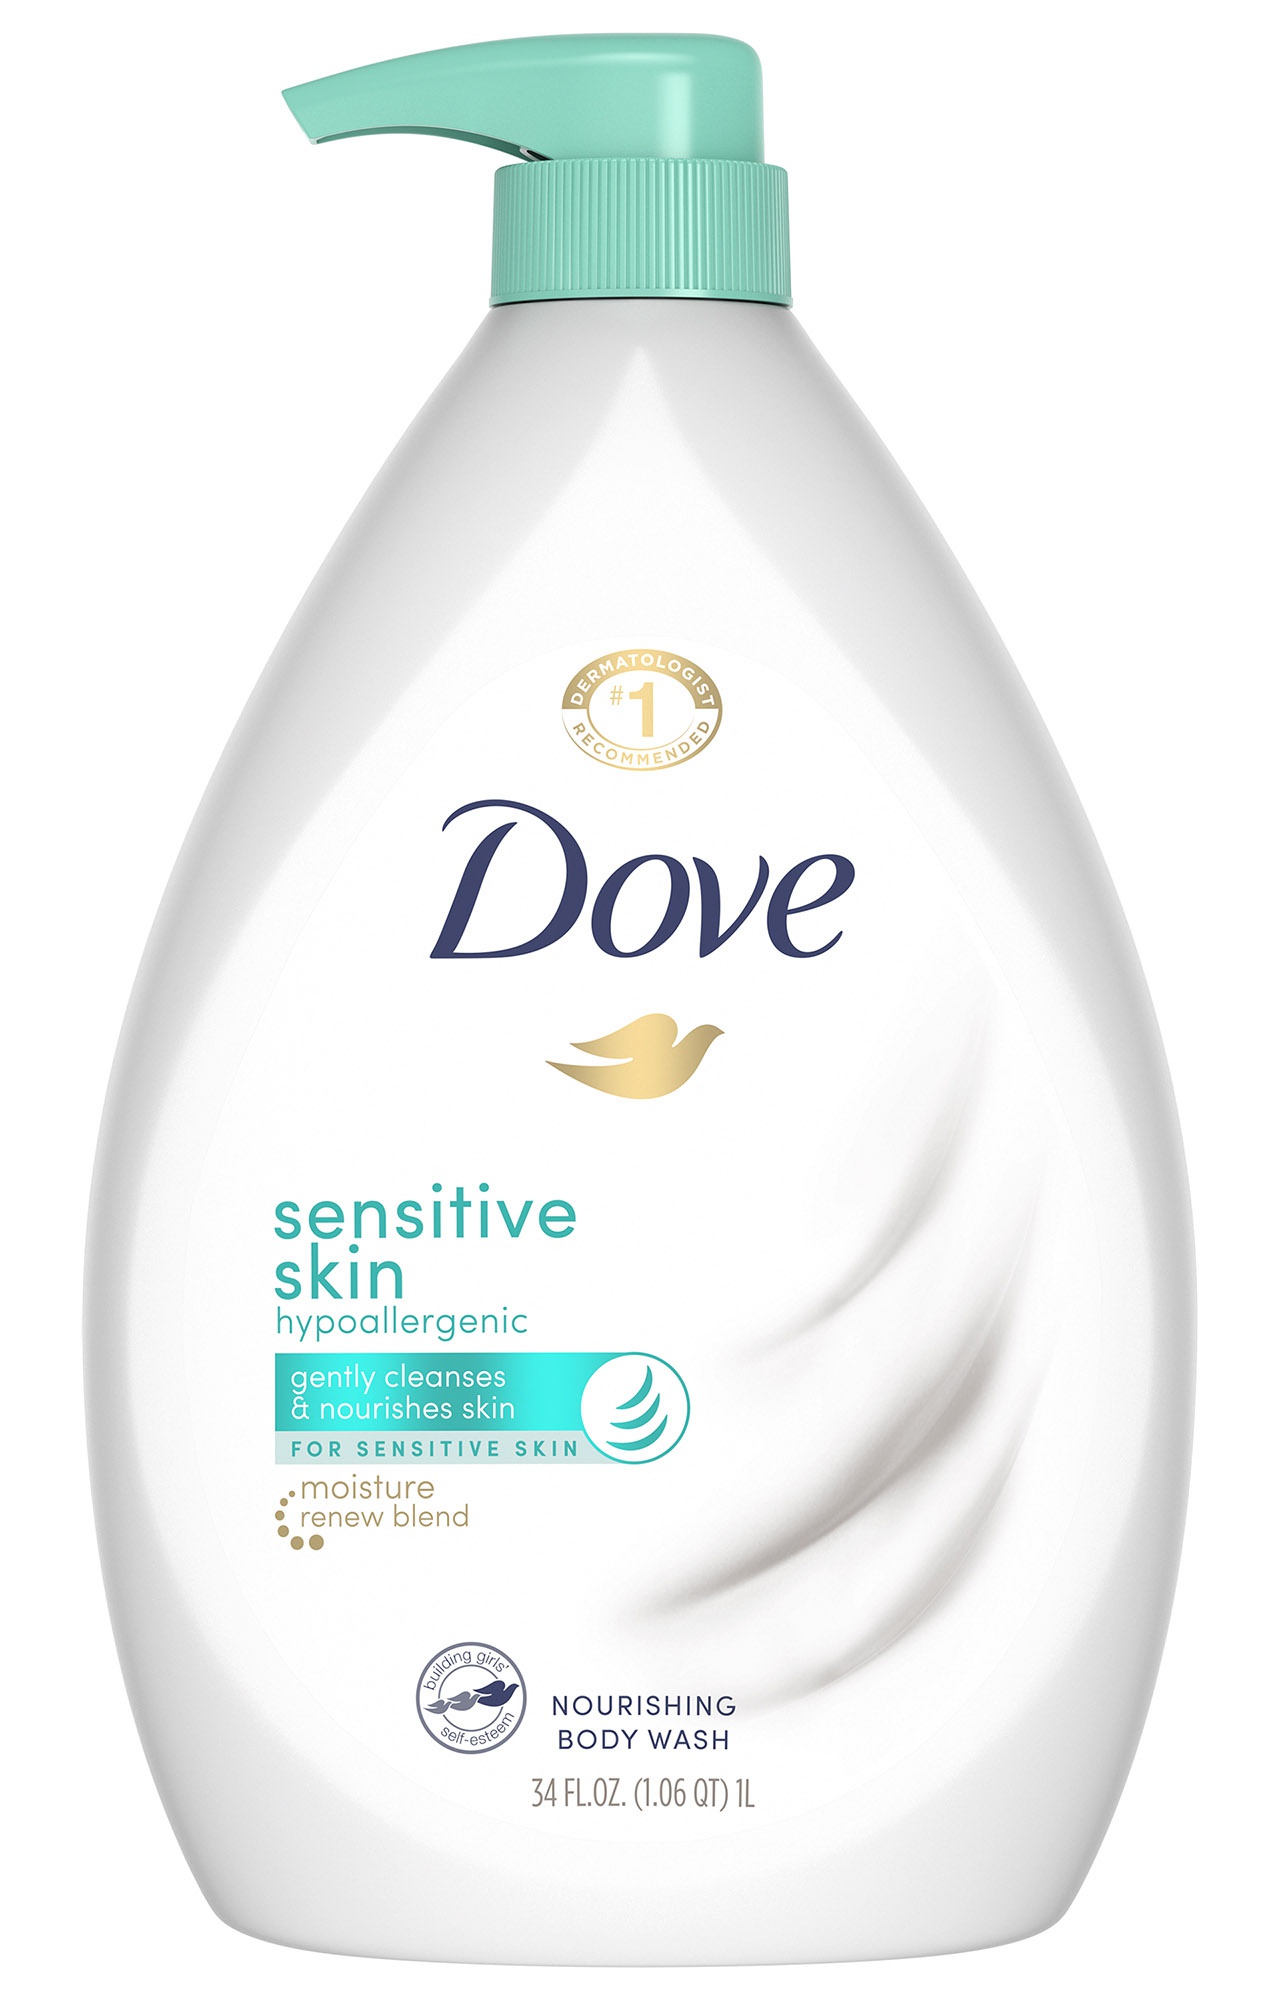 Dove Body Wash Sensitive Skin Ingredients Explained